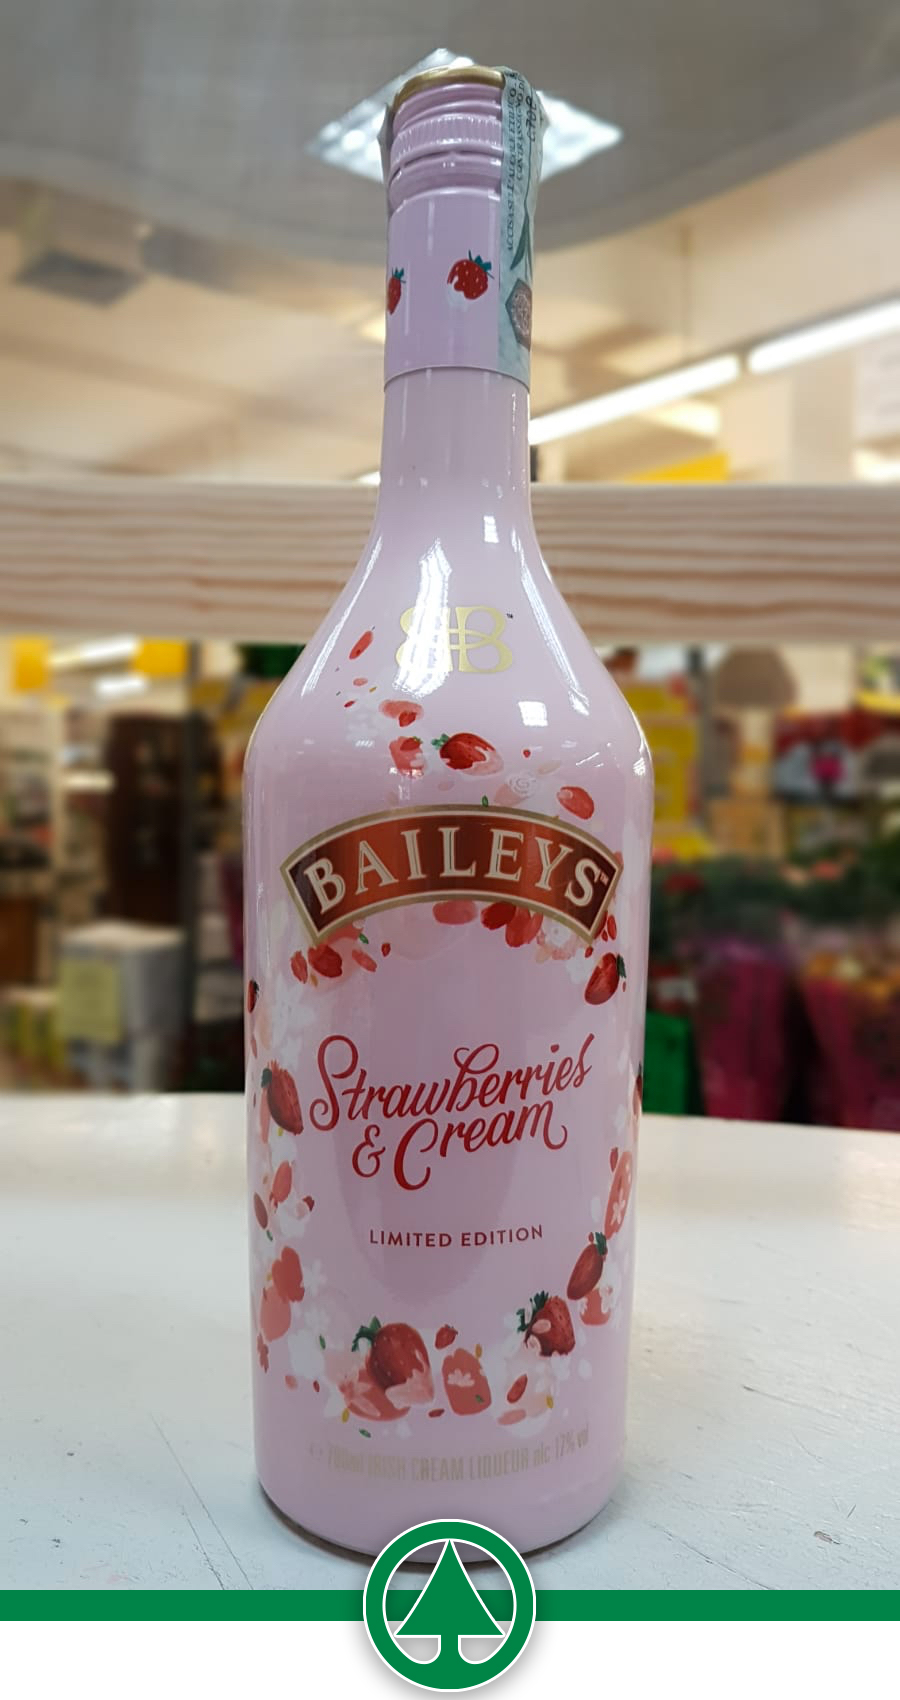 Baileys Strawberries e cream